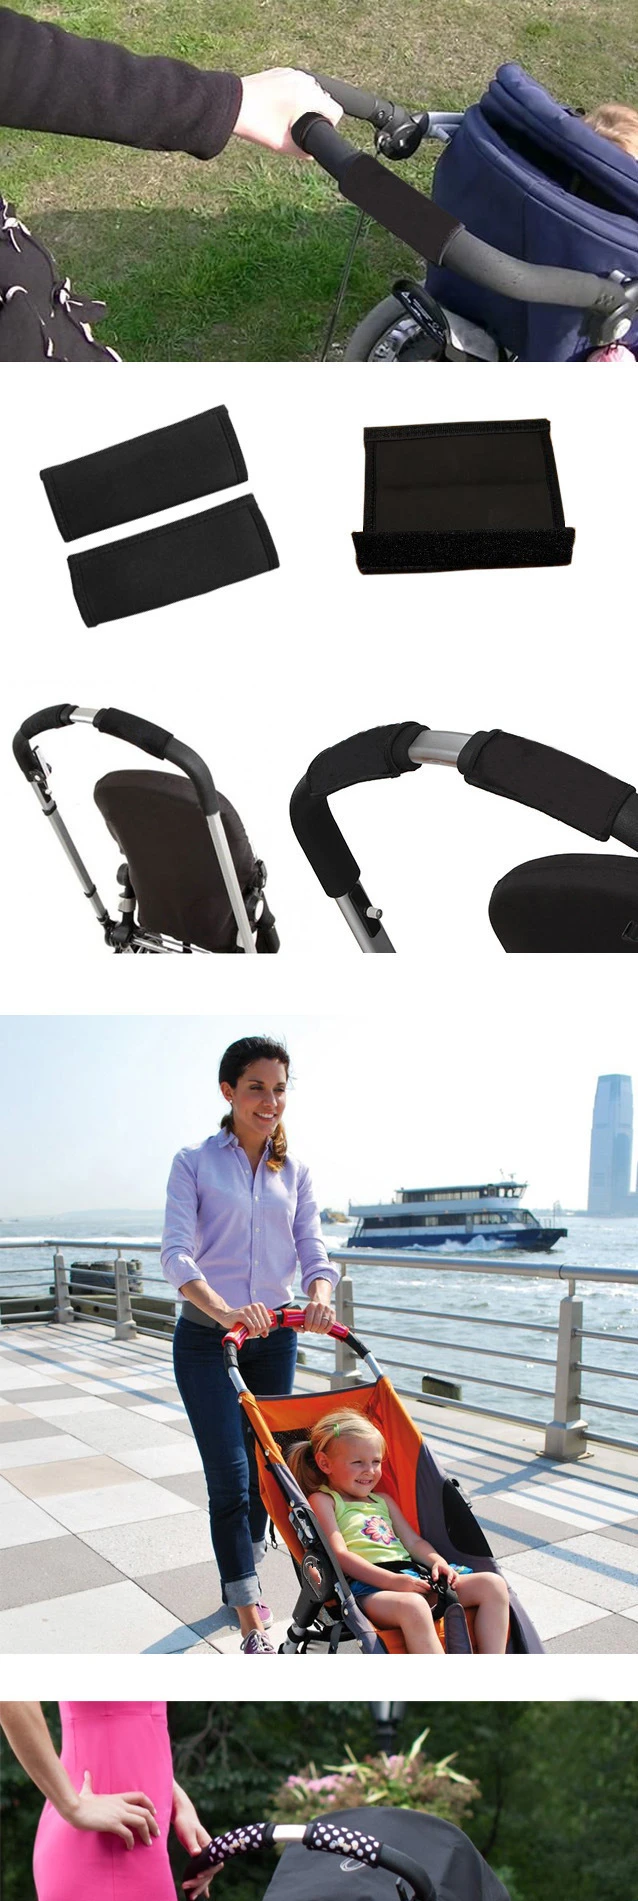 2 Pcs/set Baby Stroller Accessories Carriage Front Handle Pram Neoprene Bebek Arabasi Tape Bumper Bar Cover Accessoire Poussette baby stroller accessories outdoor